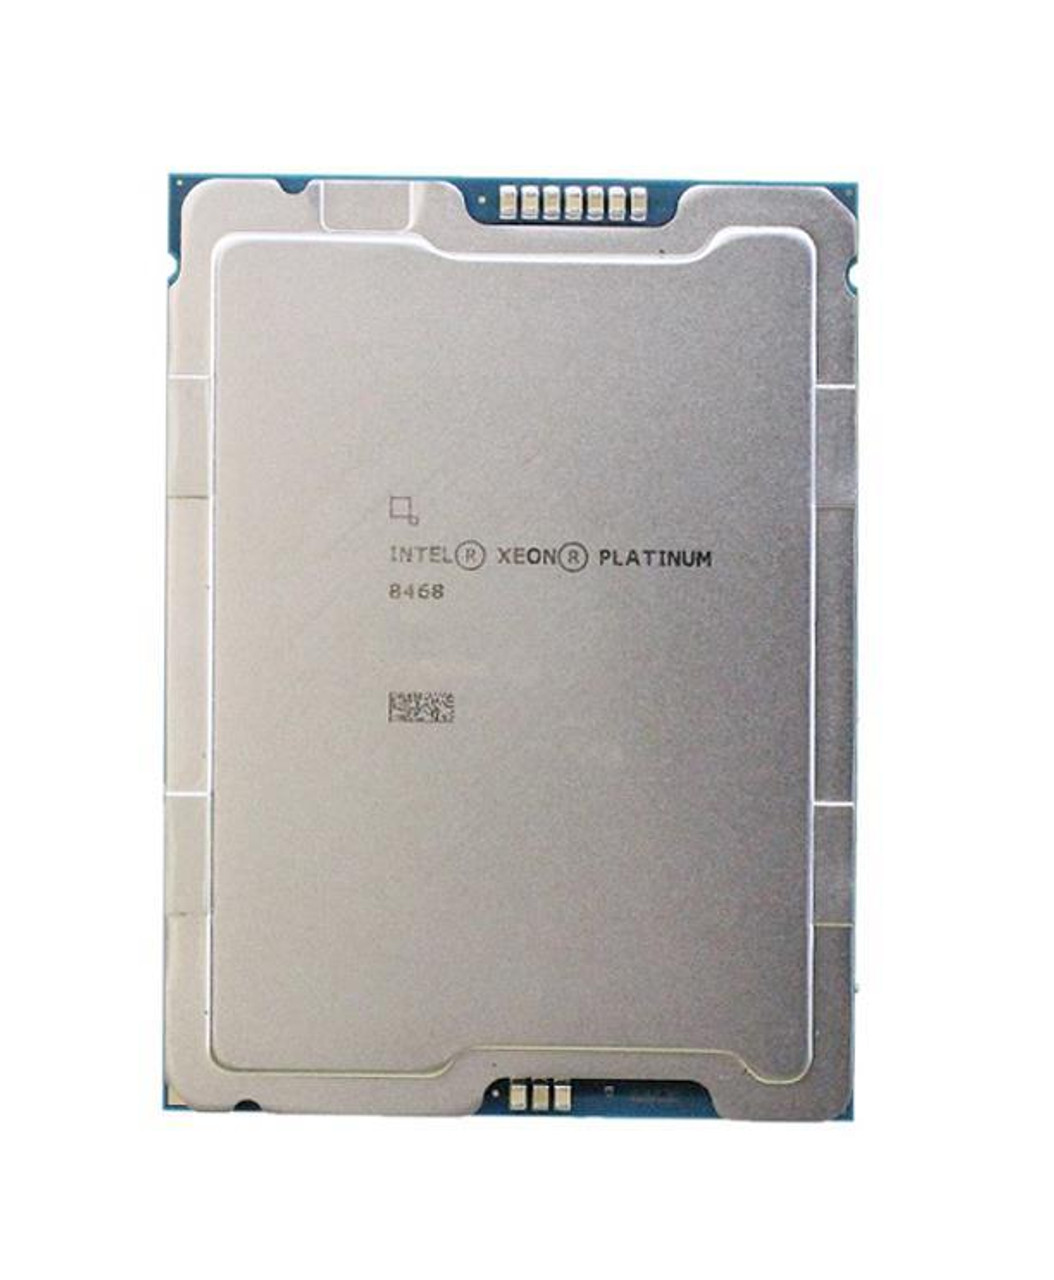 Lenovo 2.10GHz 16GT/s UPI 105MB L3 Cache Socket FCLGA4677 Intel Xeon Platinum 8468 48-Core Processor Upgrade for Think System SR650 V3